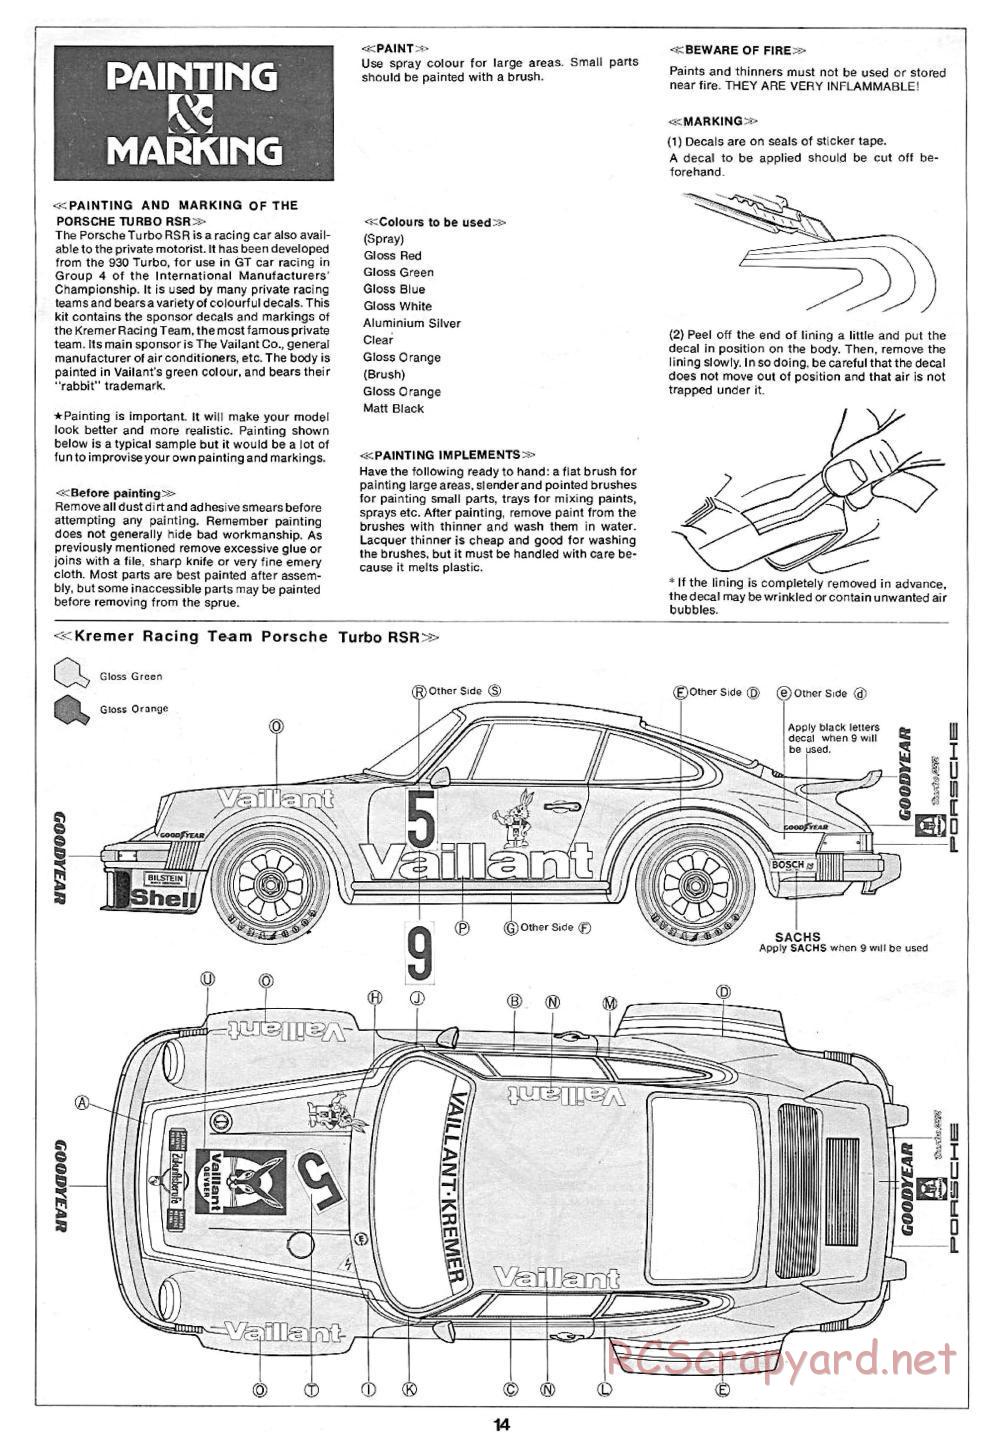 Tamiya - Porsche 934 Turbo RSR - 58001 - Manual - Page 14